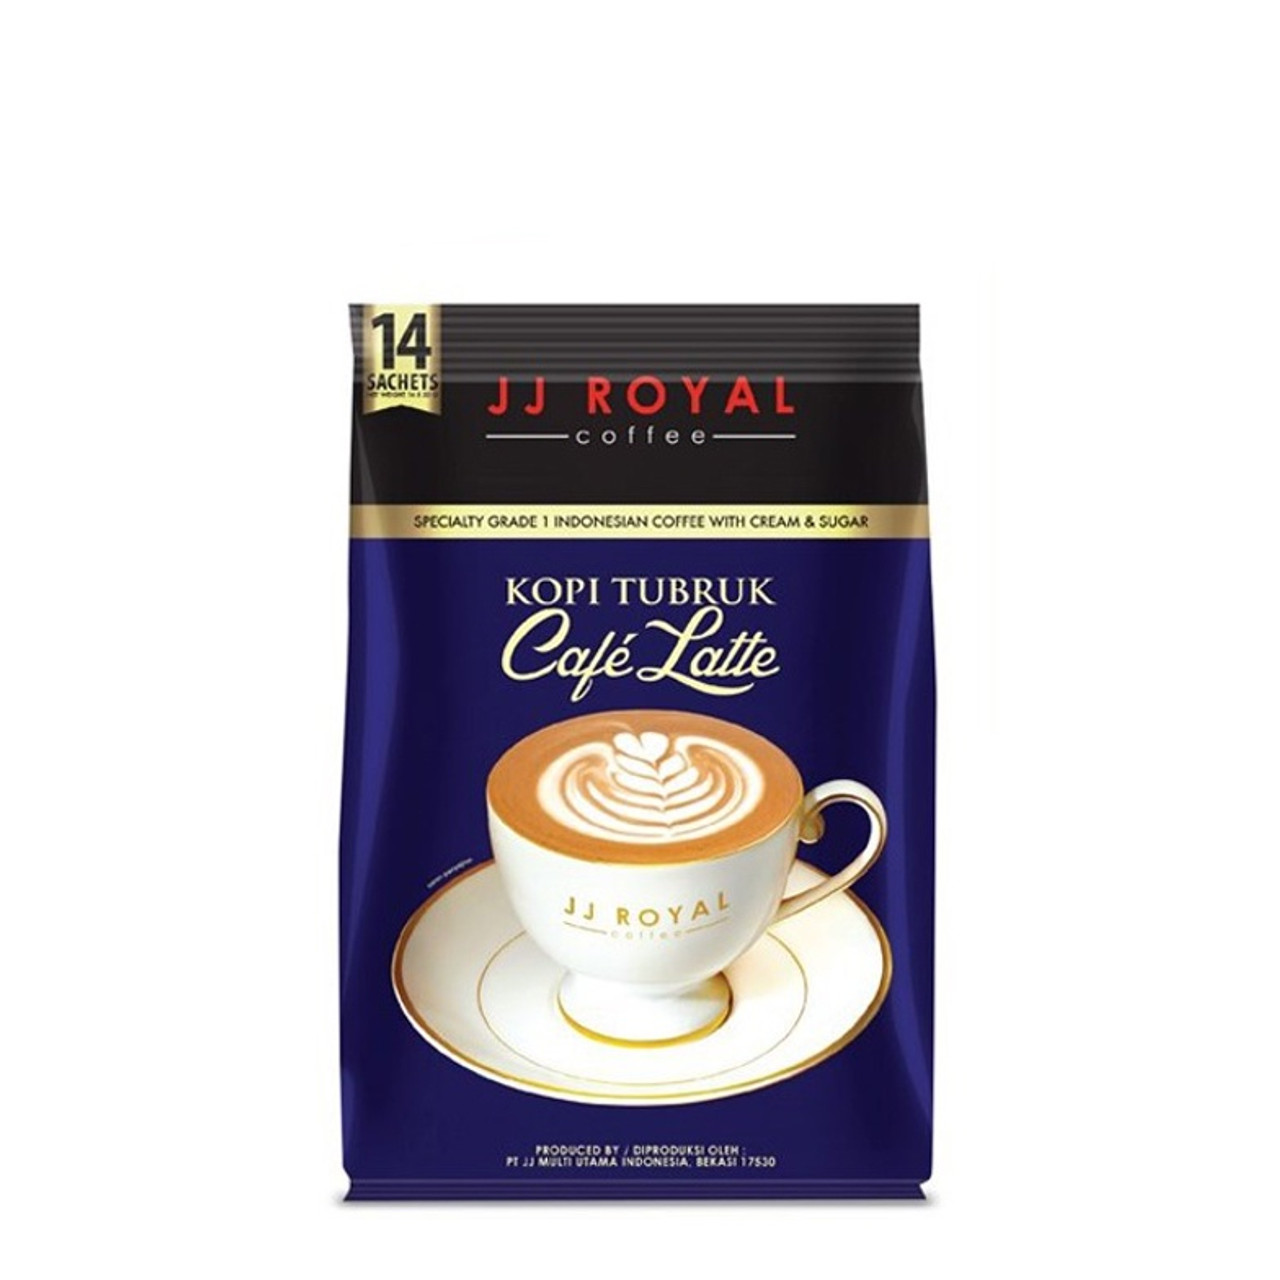 JJ Royal Kopi Tubruk Coffee Cafe' Latte, 14 Sachets @ 30 Gram